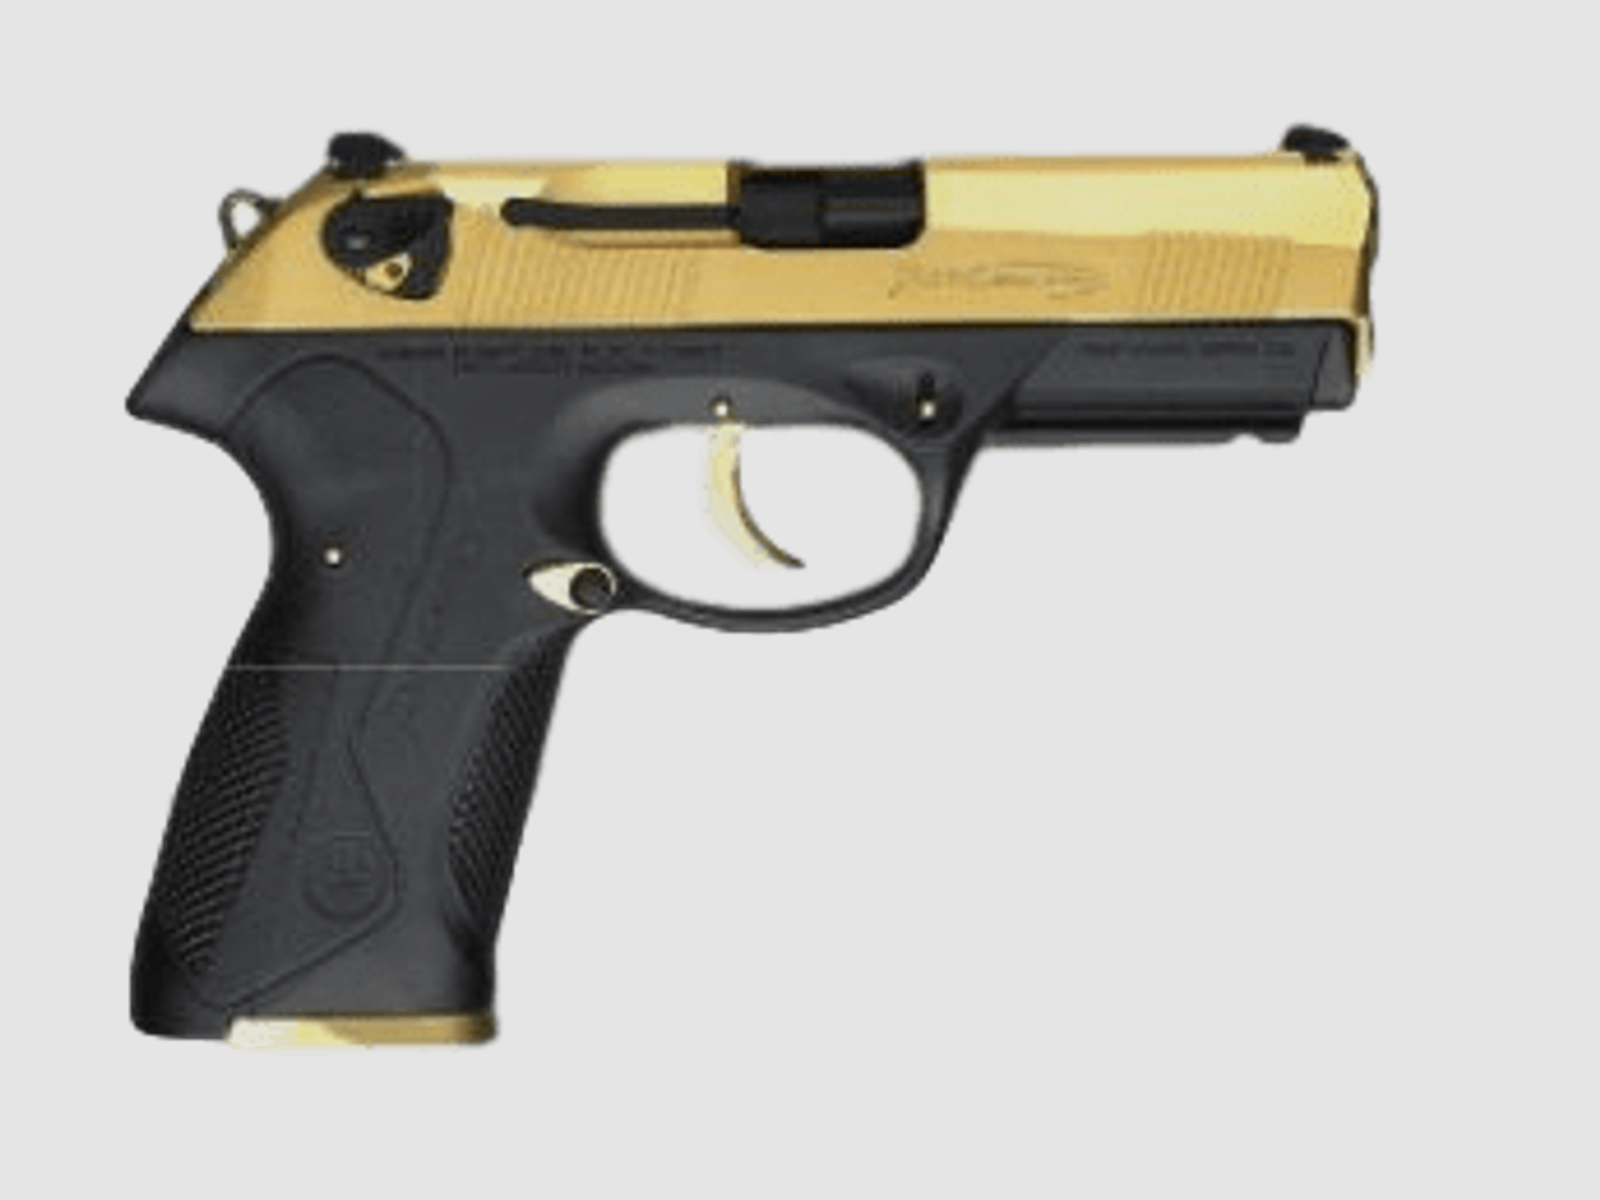 Beretta Px4 Storm Full Size de Luxe 9mm Luger Pistole